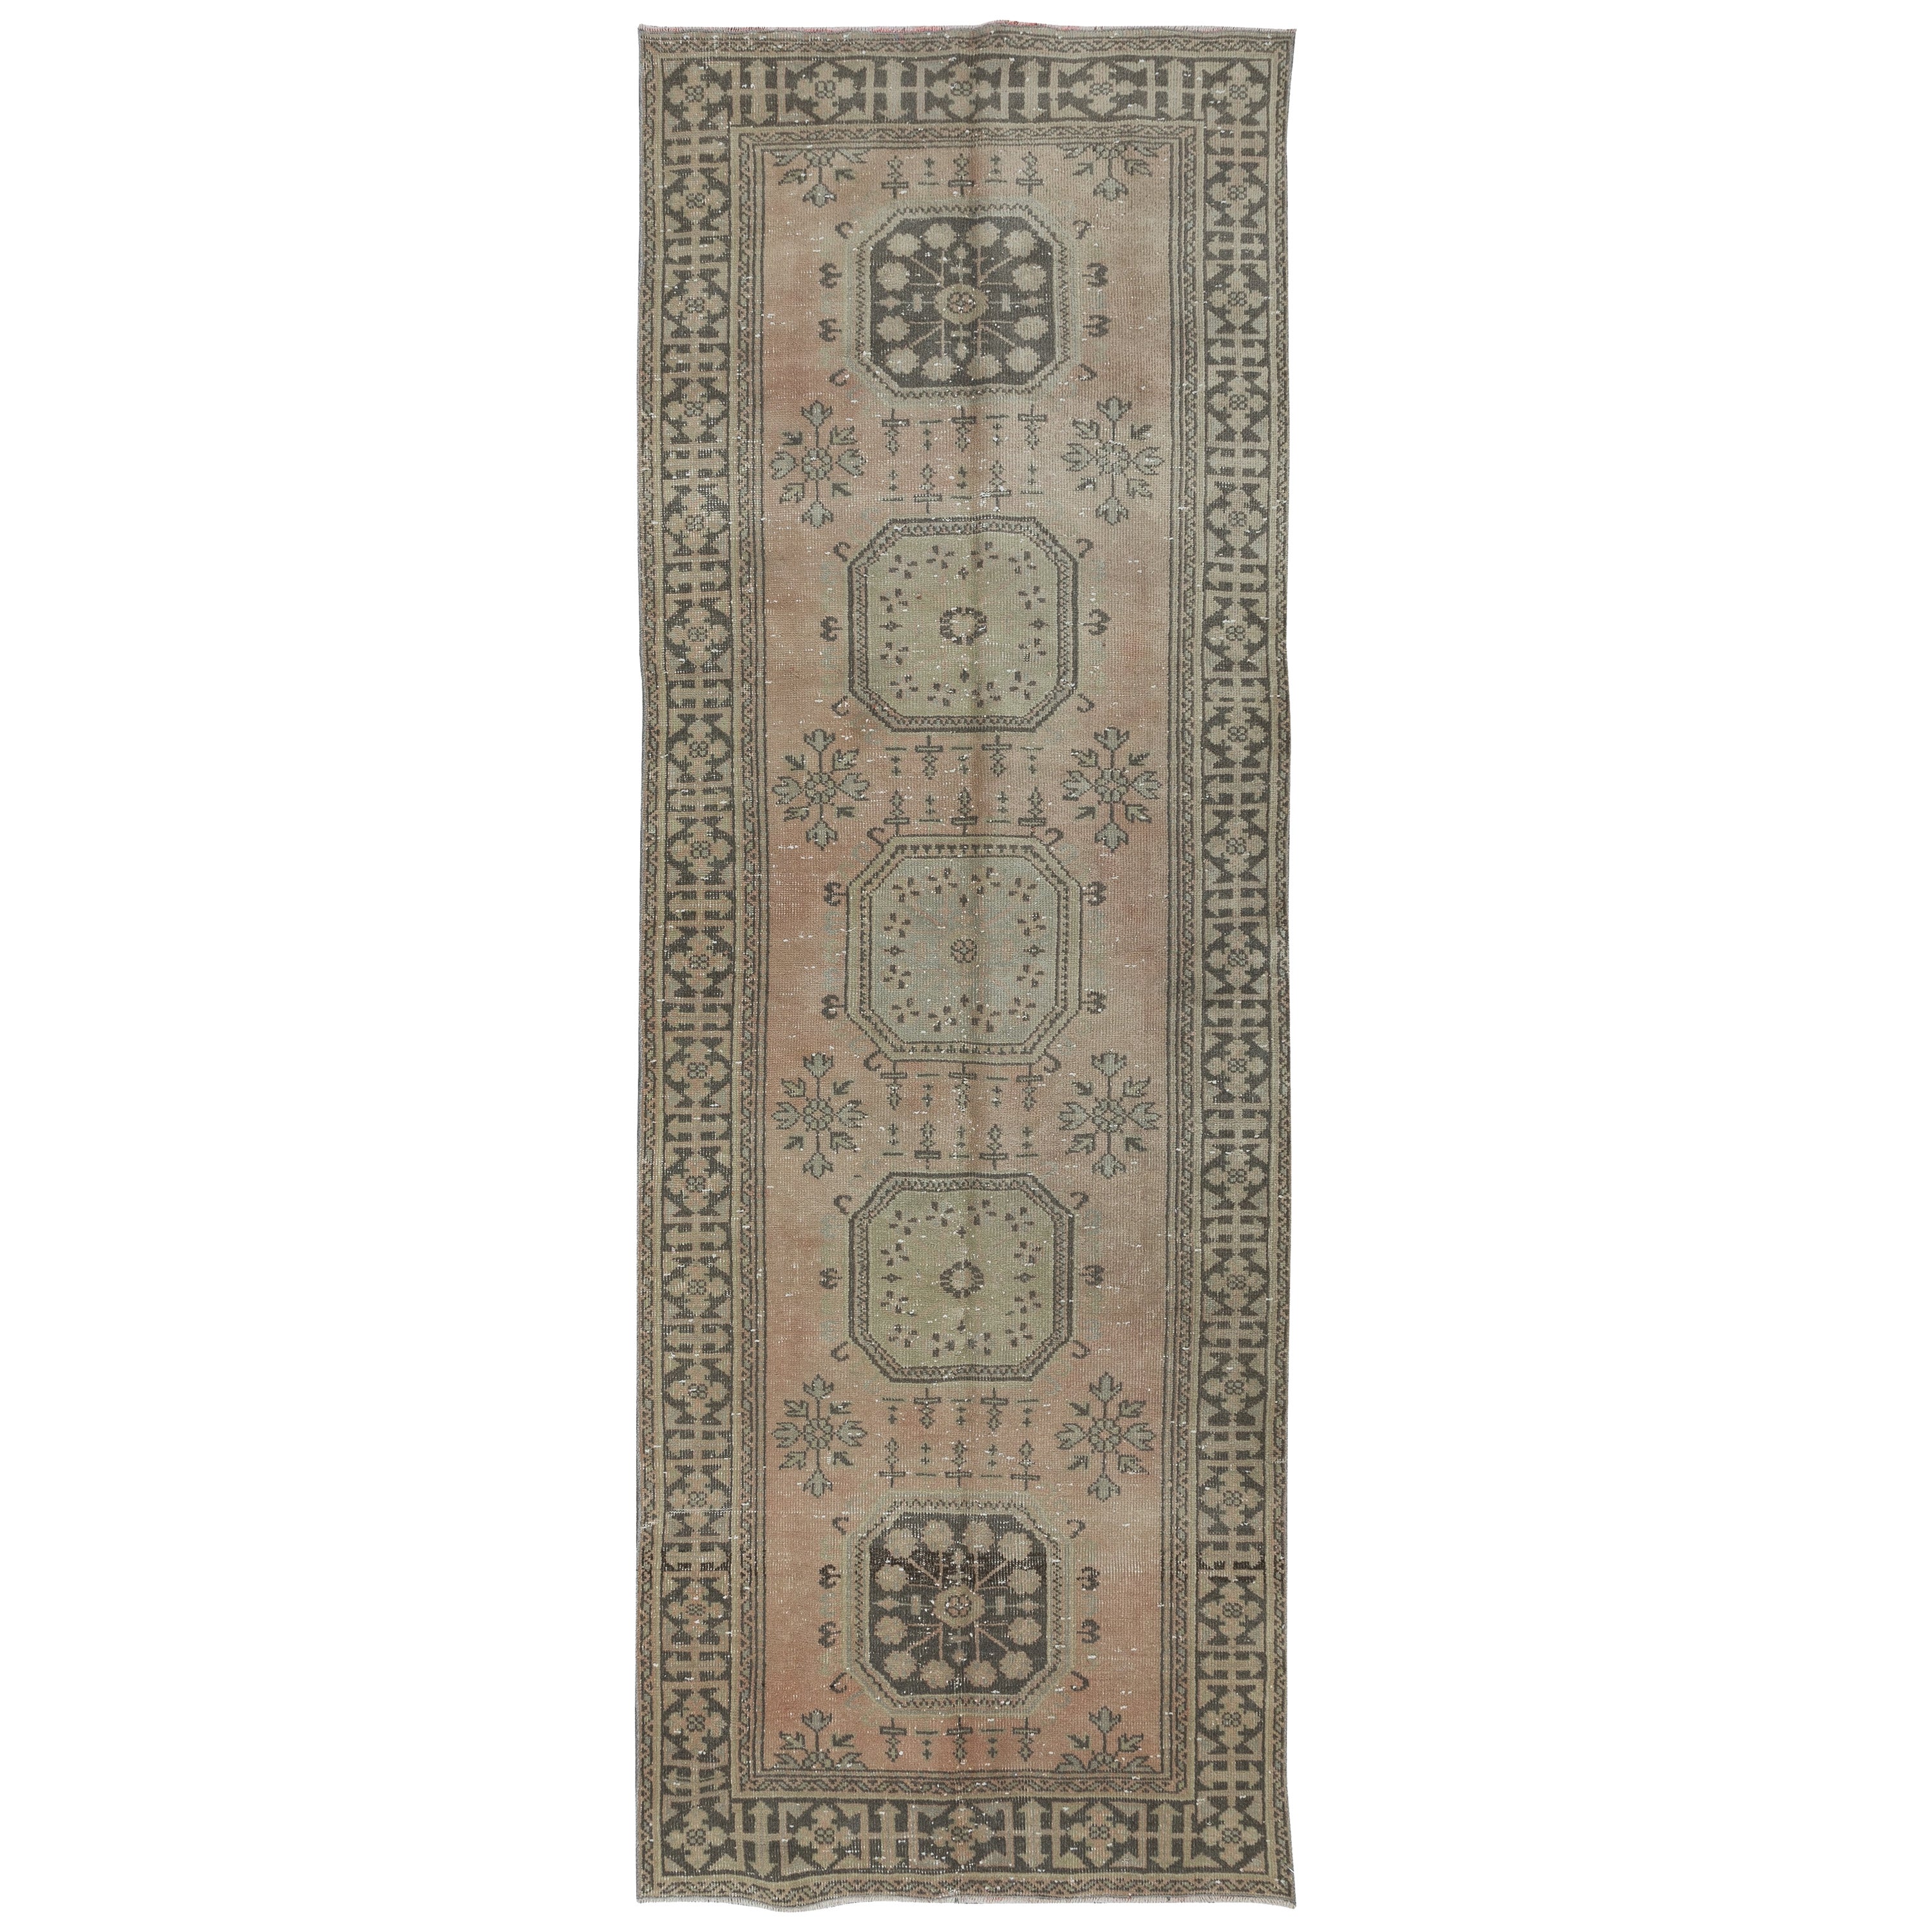 4.5x12 Ft Traditional Handmade Hallway Runner, Vintage Turkish Corridor Rug